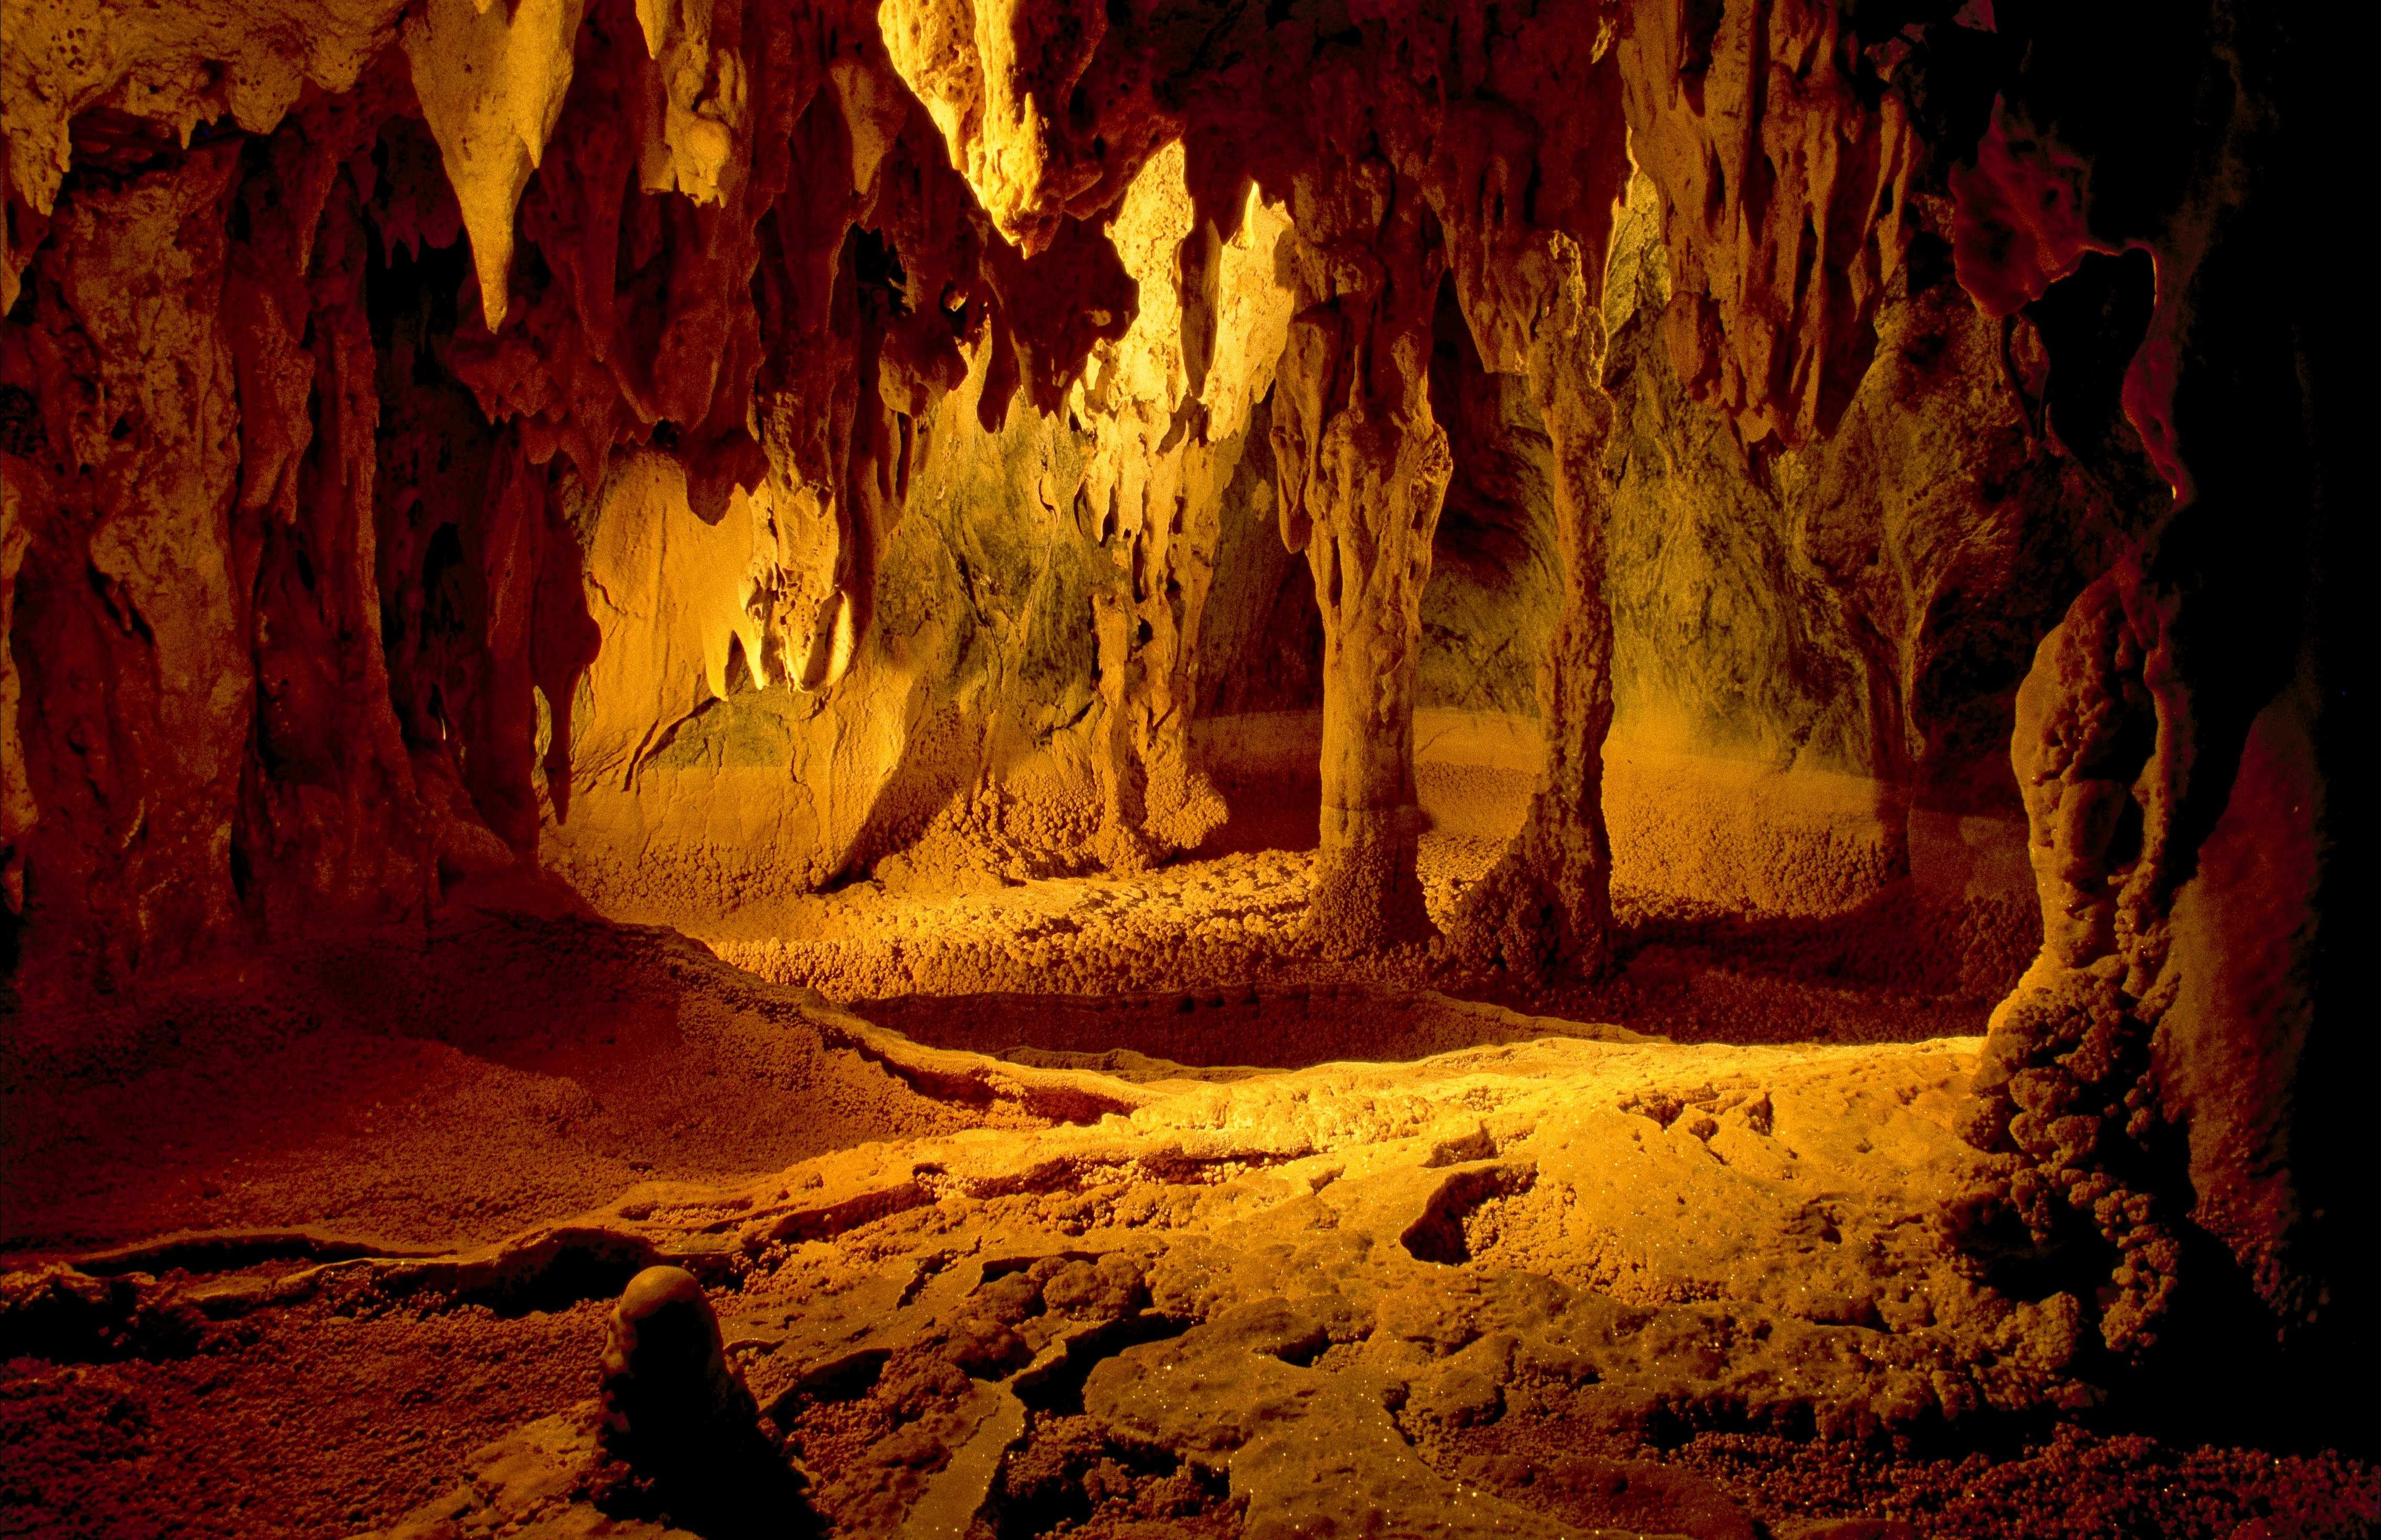 Chillagoe-Mungana Caves National Park Logo and Images